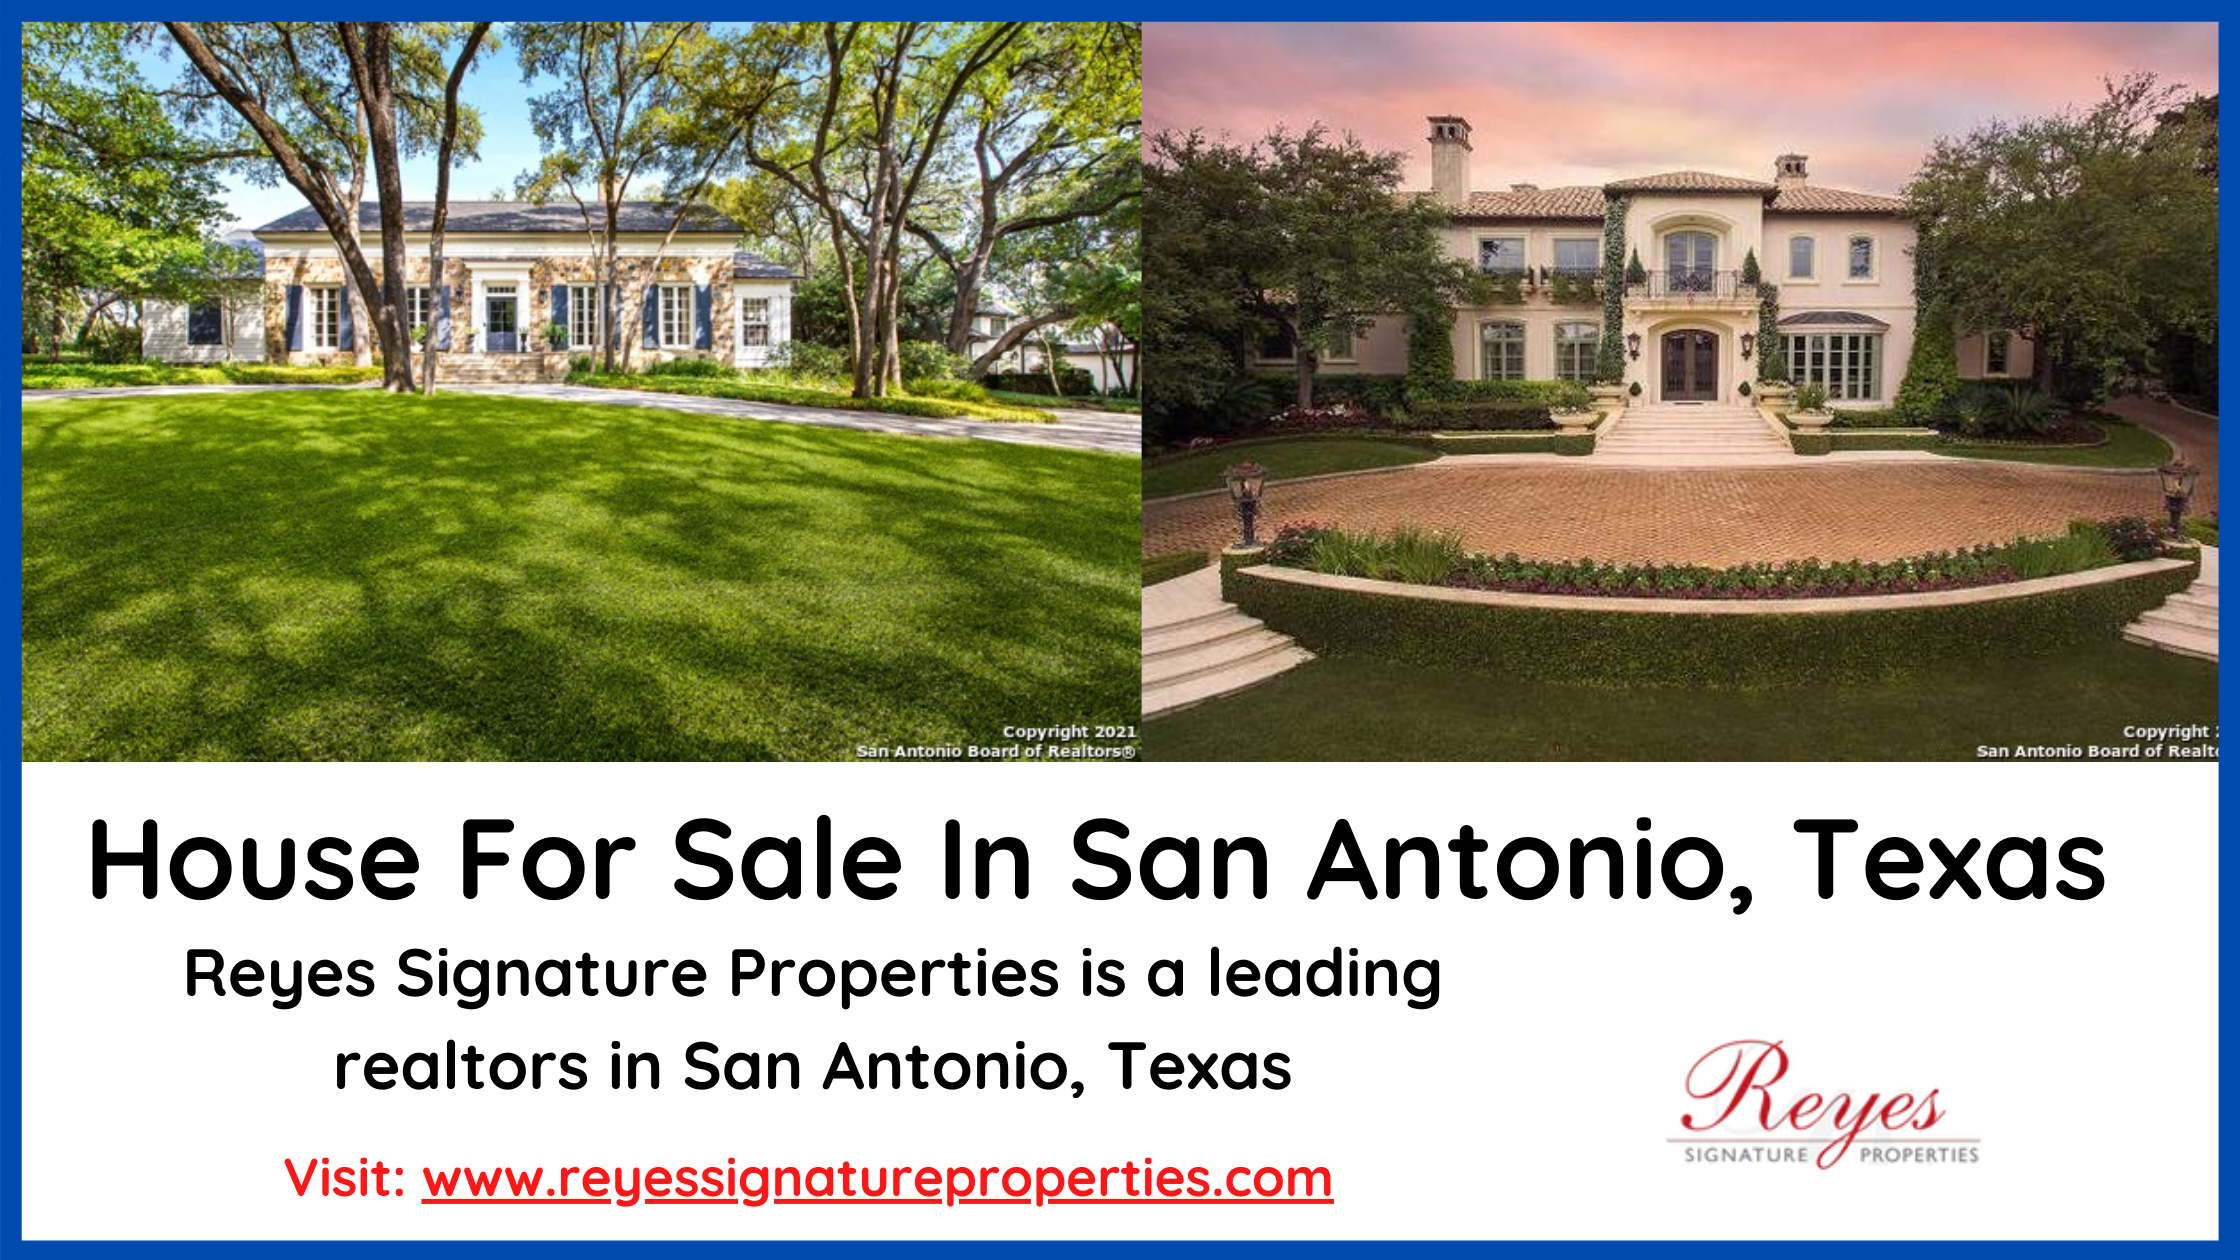 House for sale in san Antonio | Reyes Signature Properties